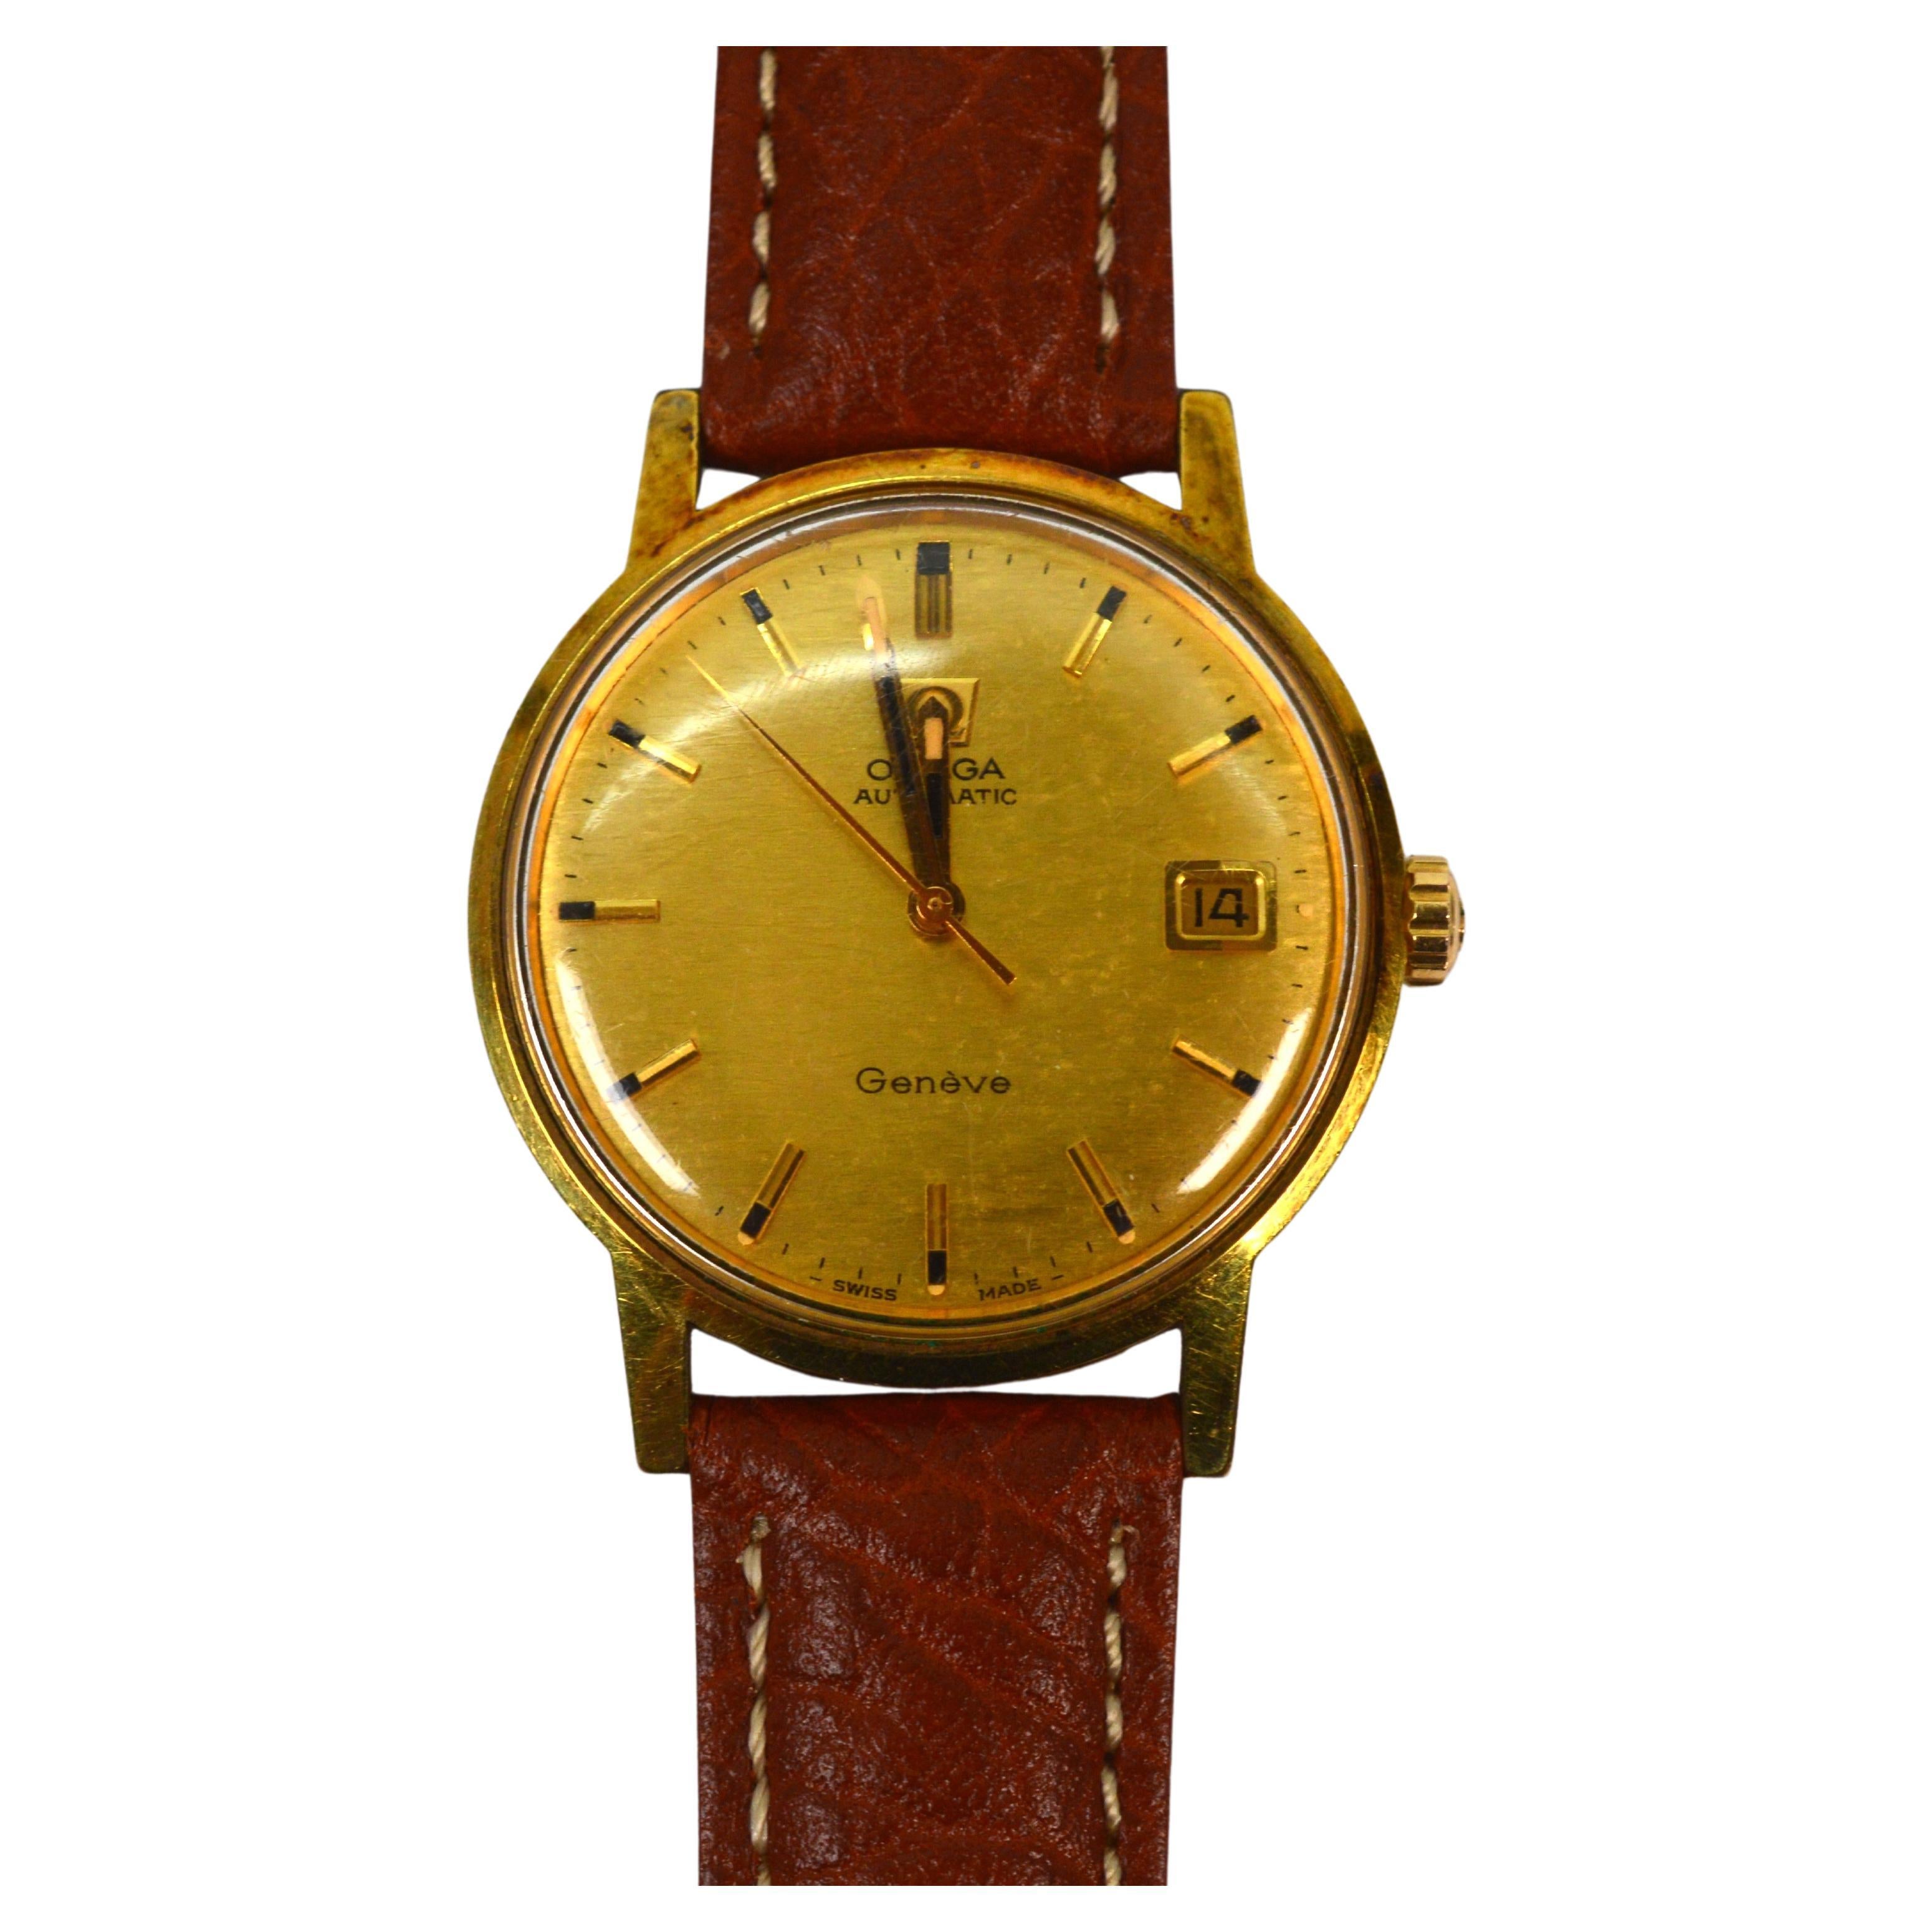 Omega 565 Steel Men's Wrist Watch with Date